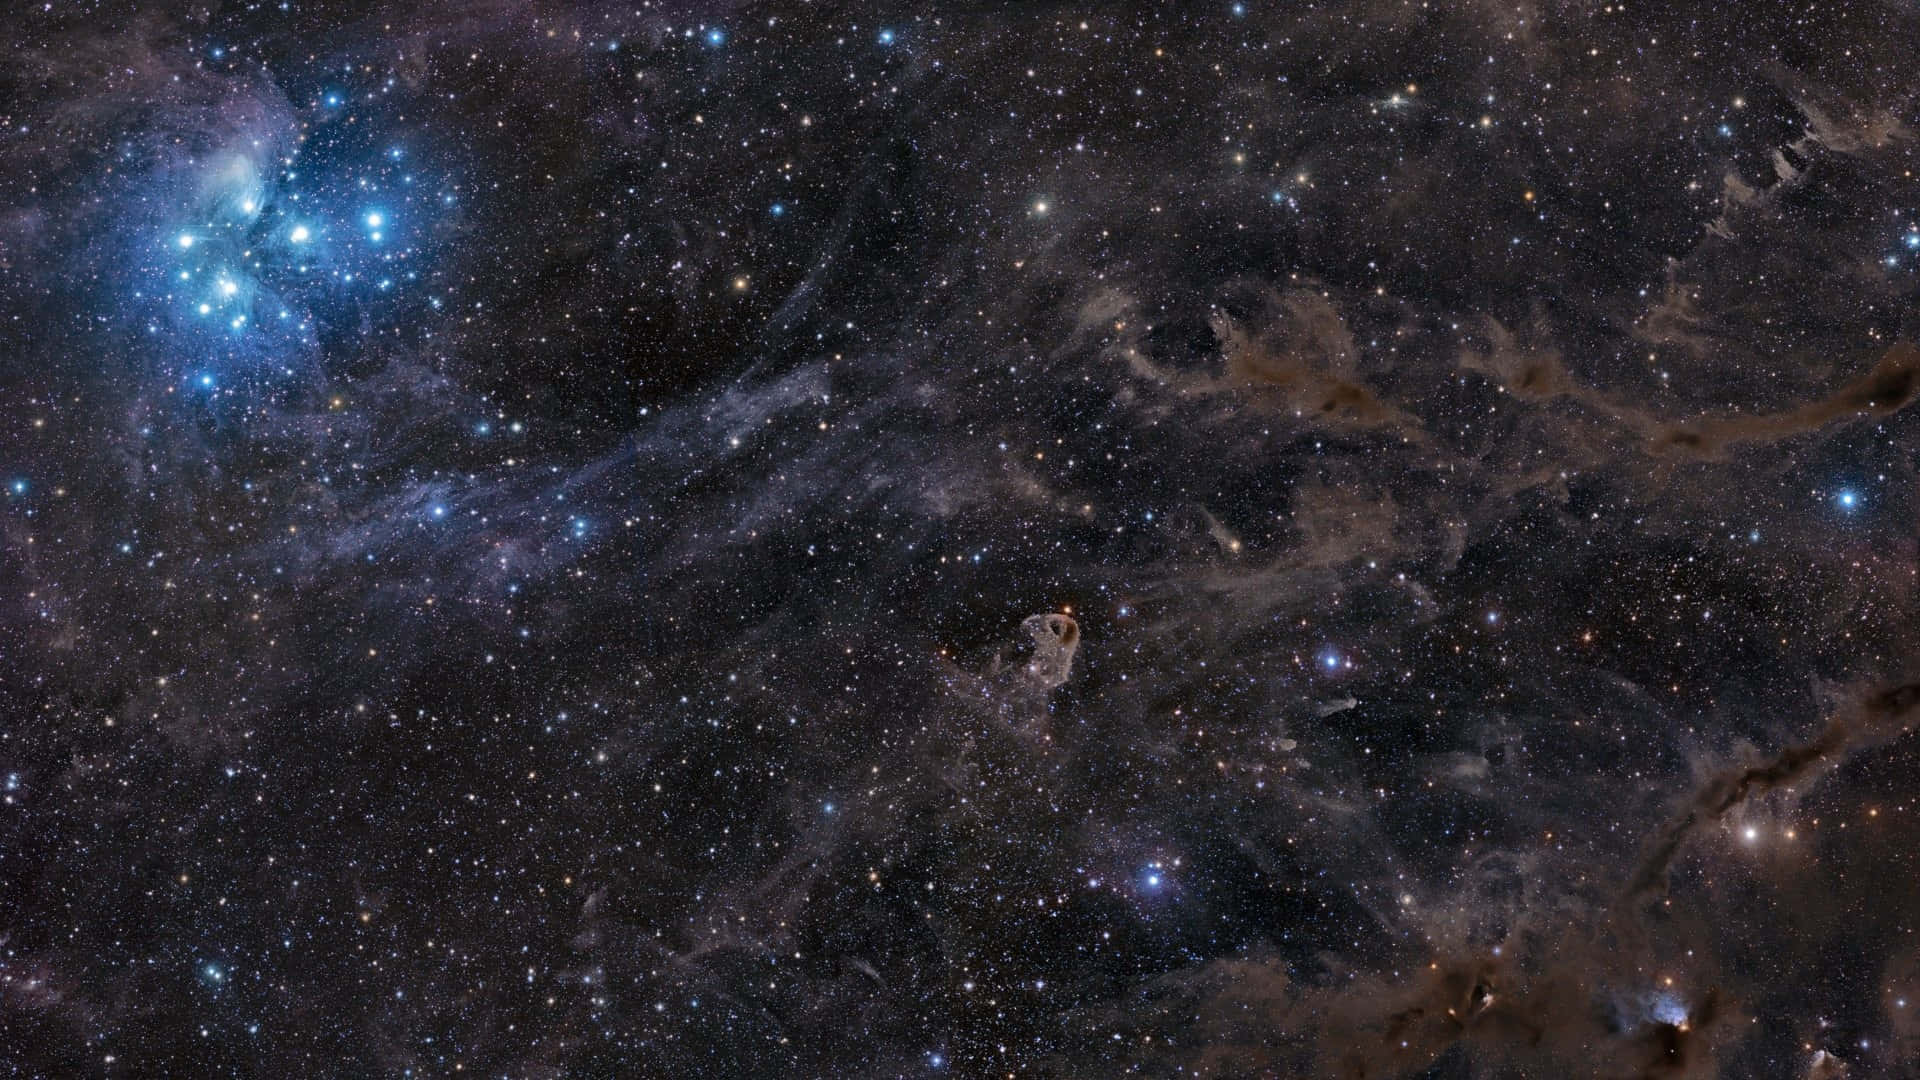 Caption: Stunning Deep Space Nebula Exploration Wallpaper